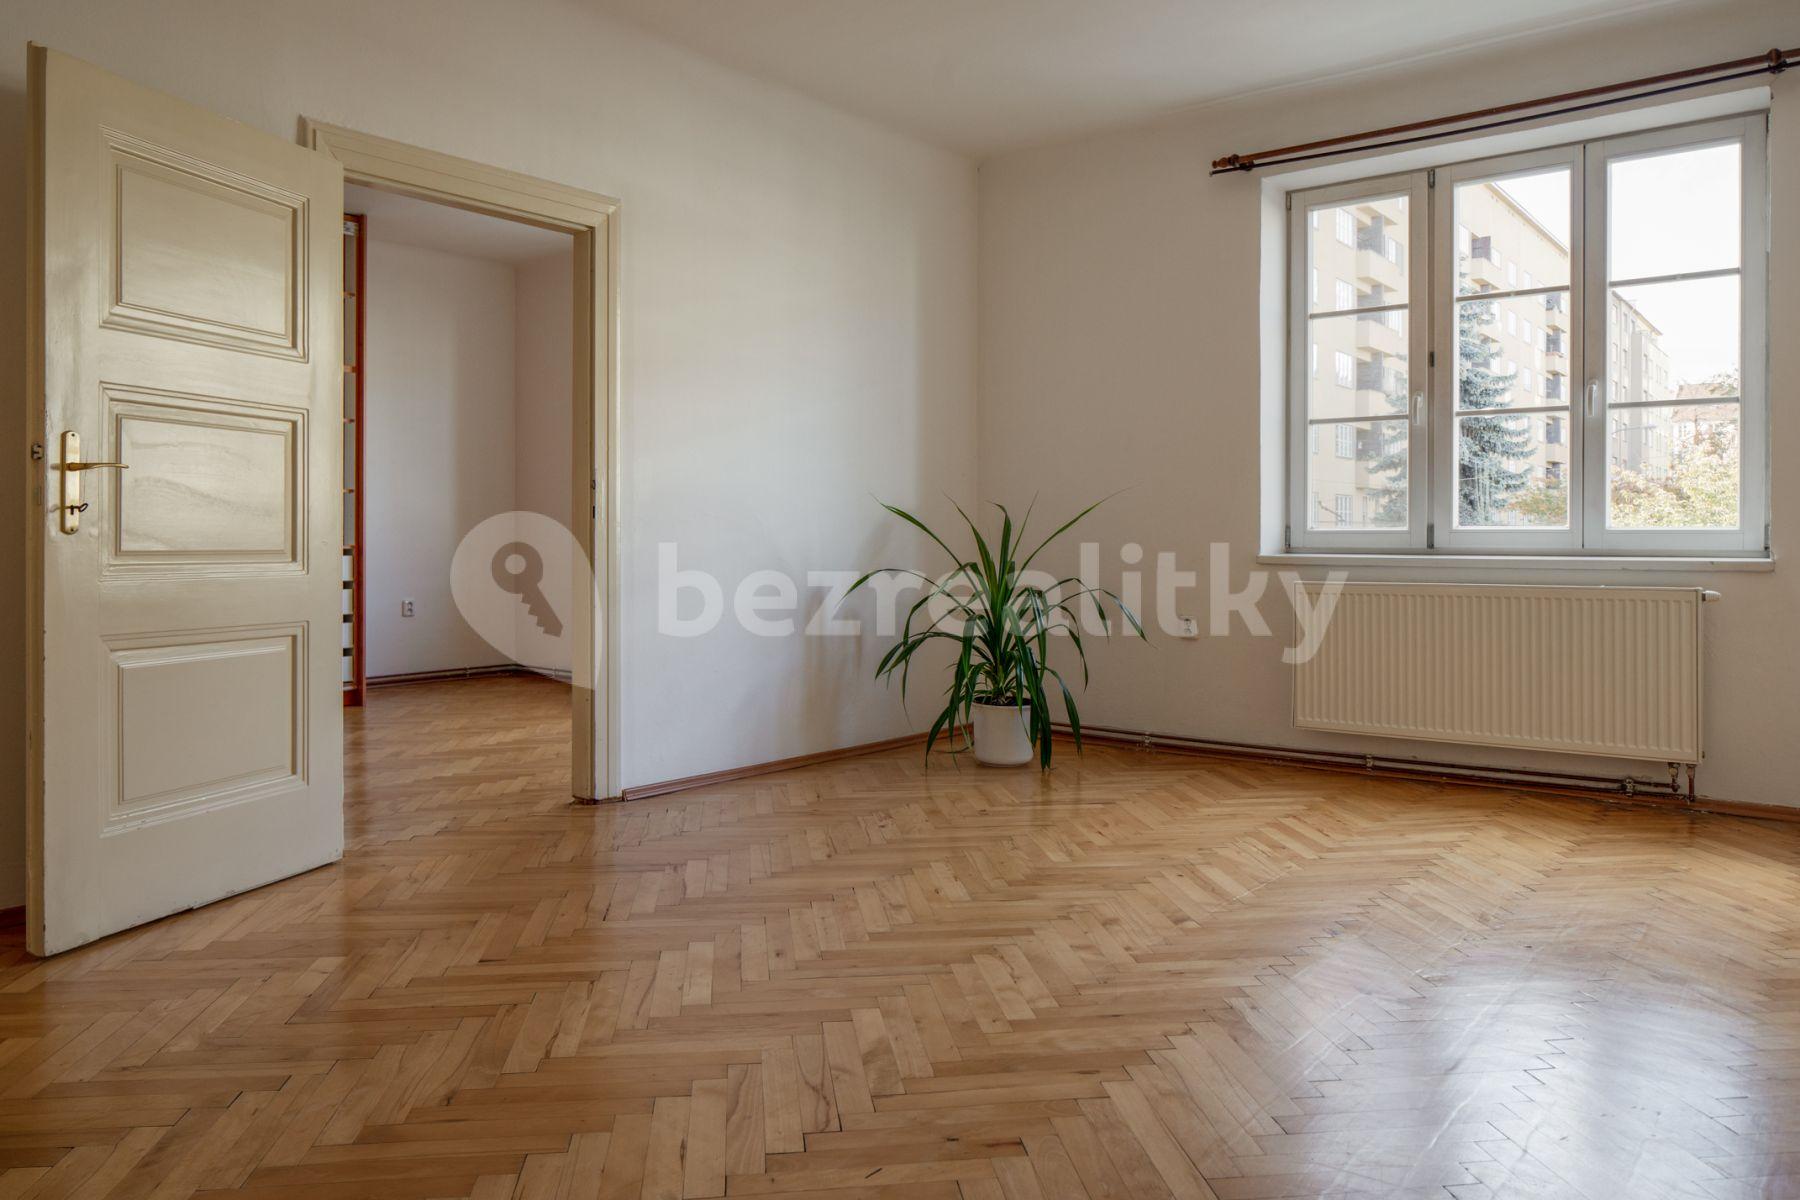 Predaj bytu 2-izbový 81 m², Merhautova, Brno, Jihomoravský kraj